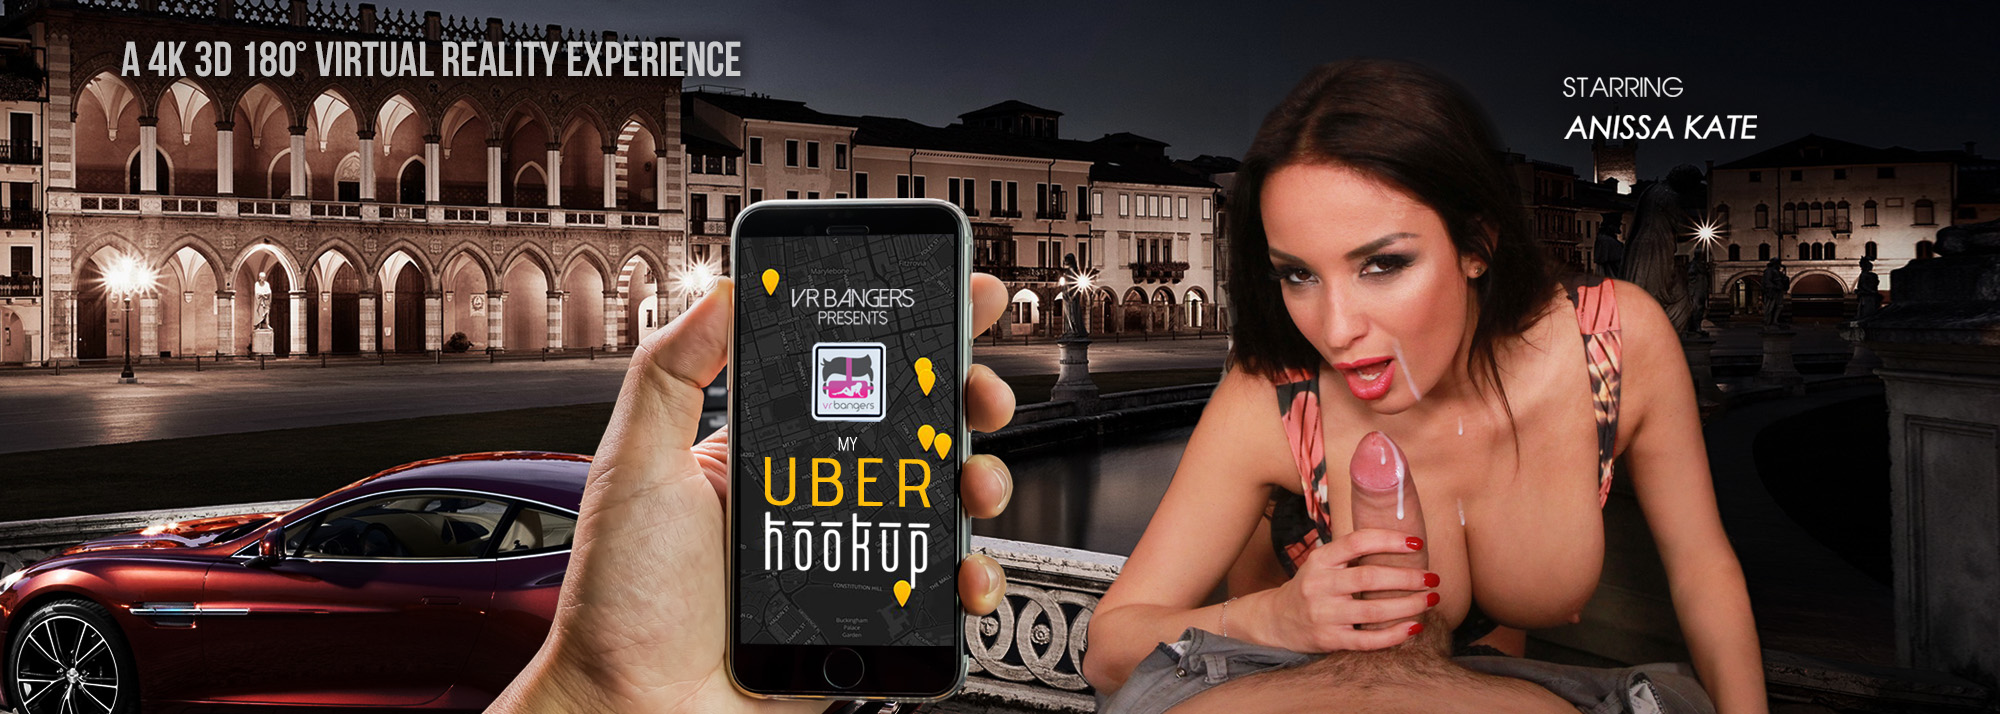 My Uber Hookup - VR Porn Video, Starring: Anissa Kate